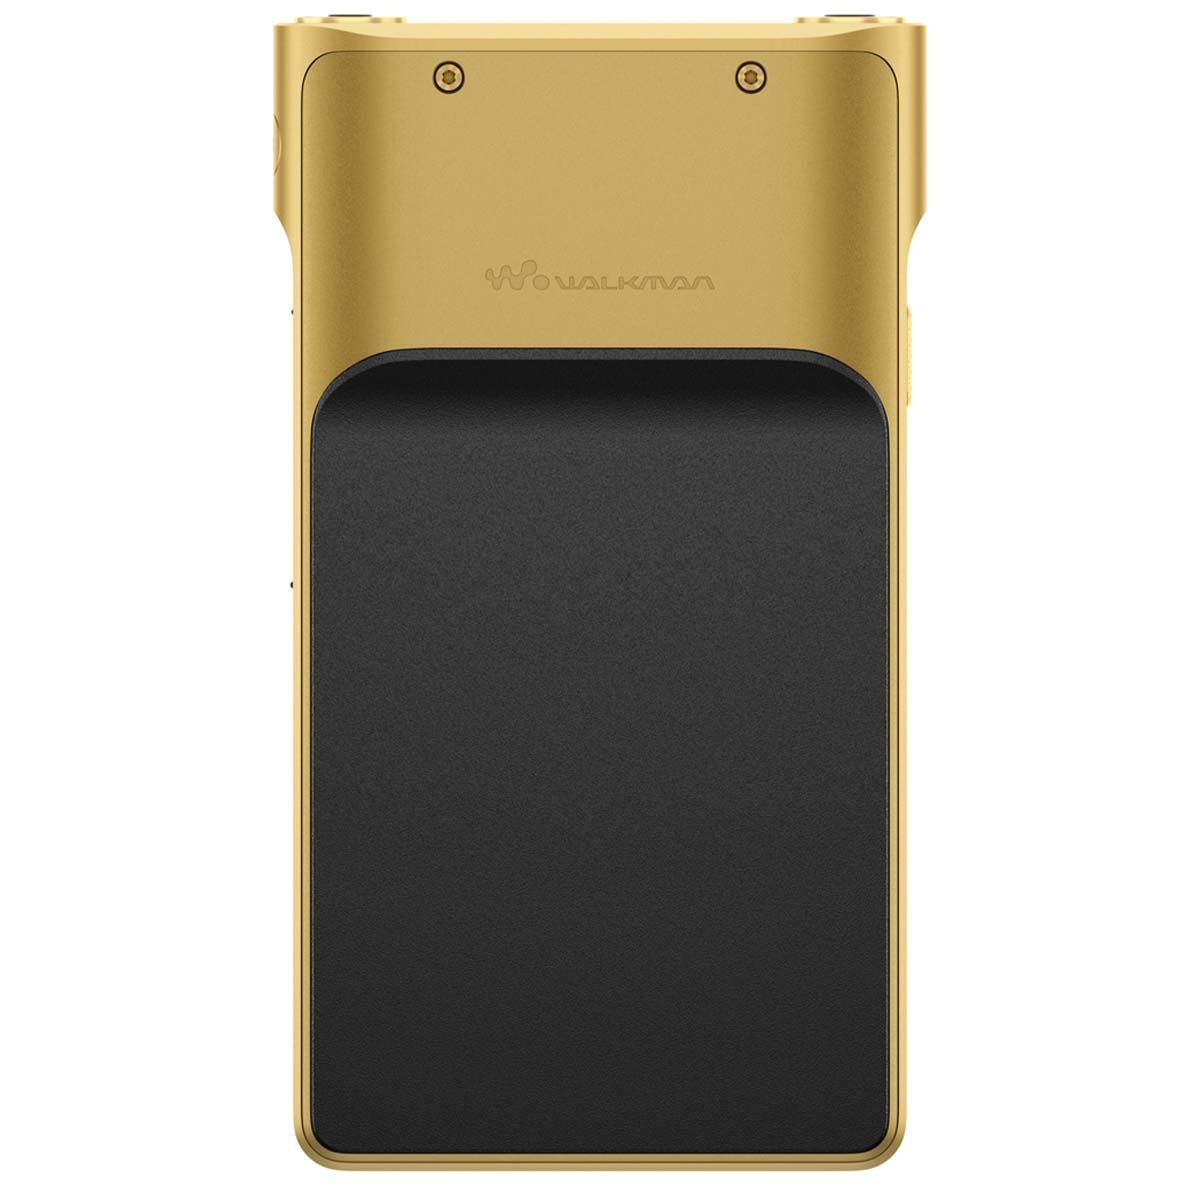 Sony Walkman WM1ZM2 - Signature Series Digital Player - Android 11 - rear view